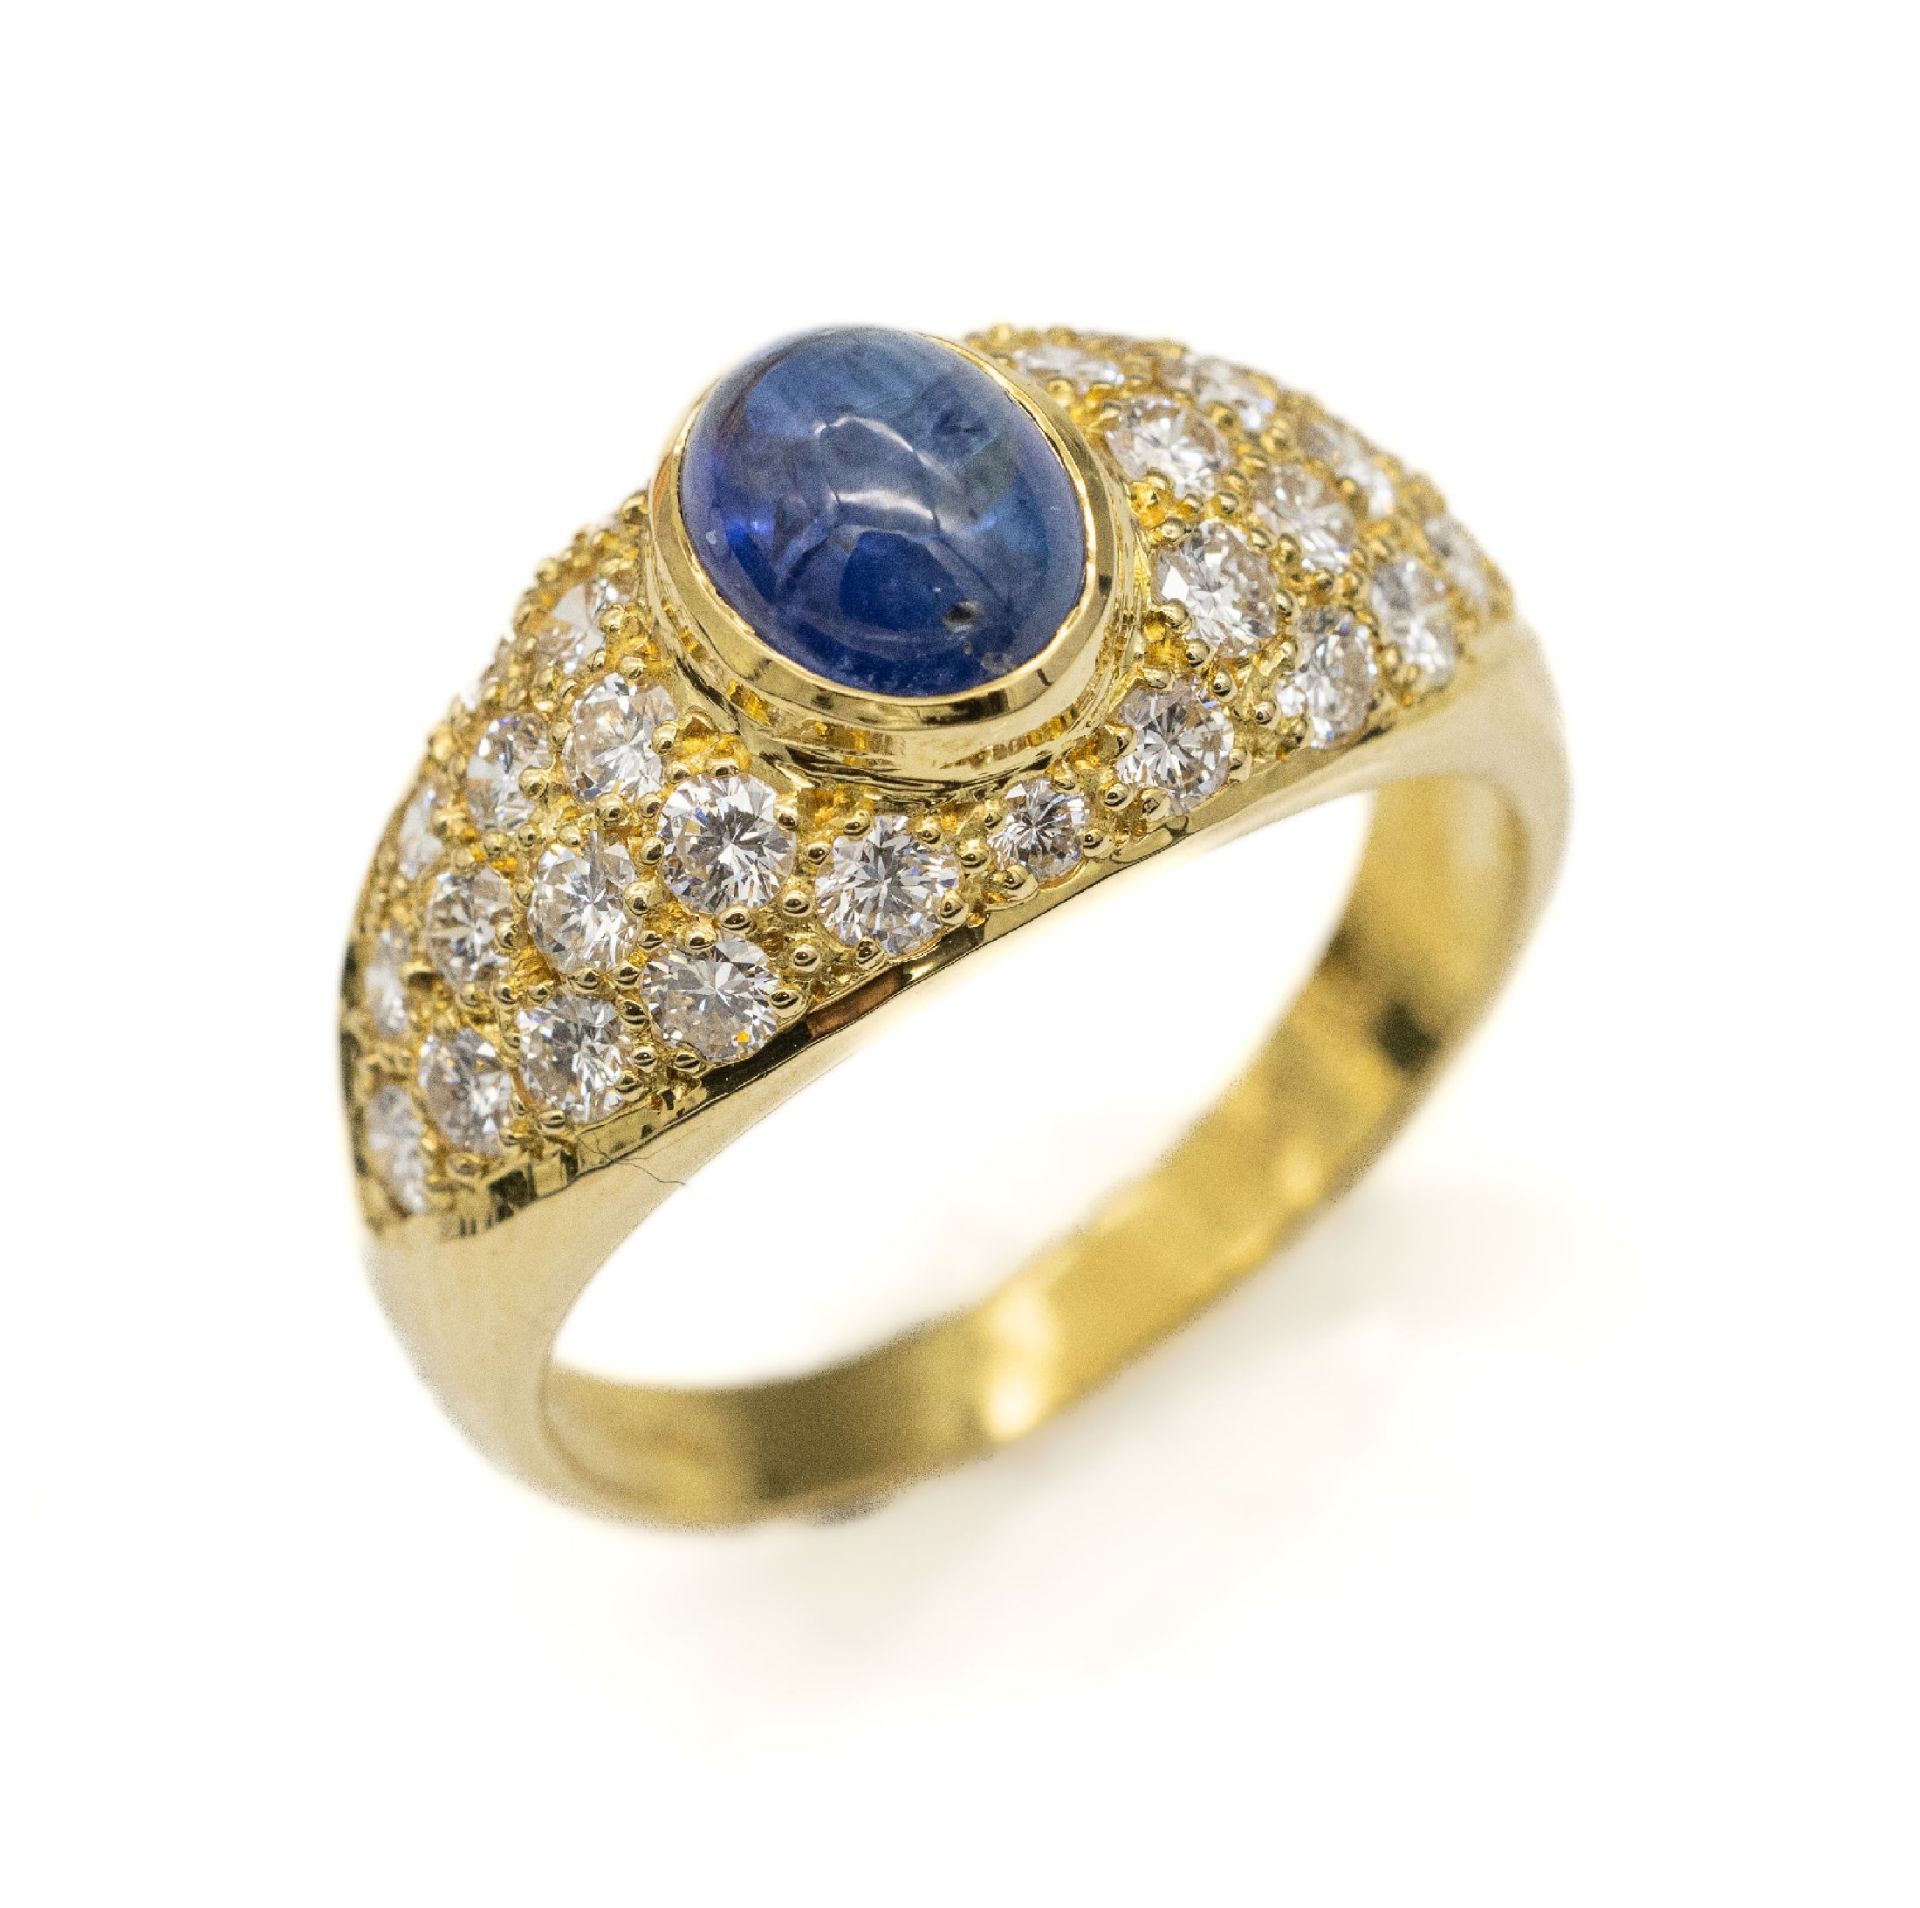 18 kt Gold Saphir-Brillant-Ring, GG 750/000, mittig